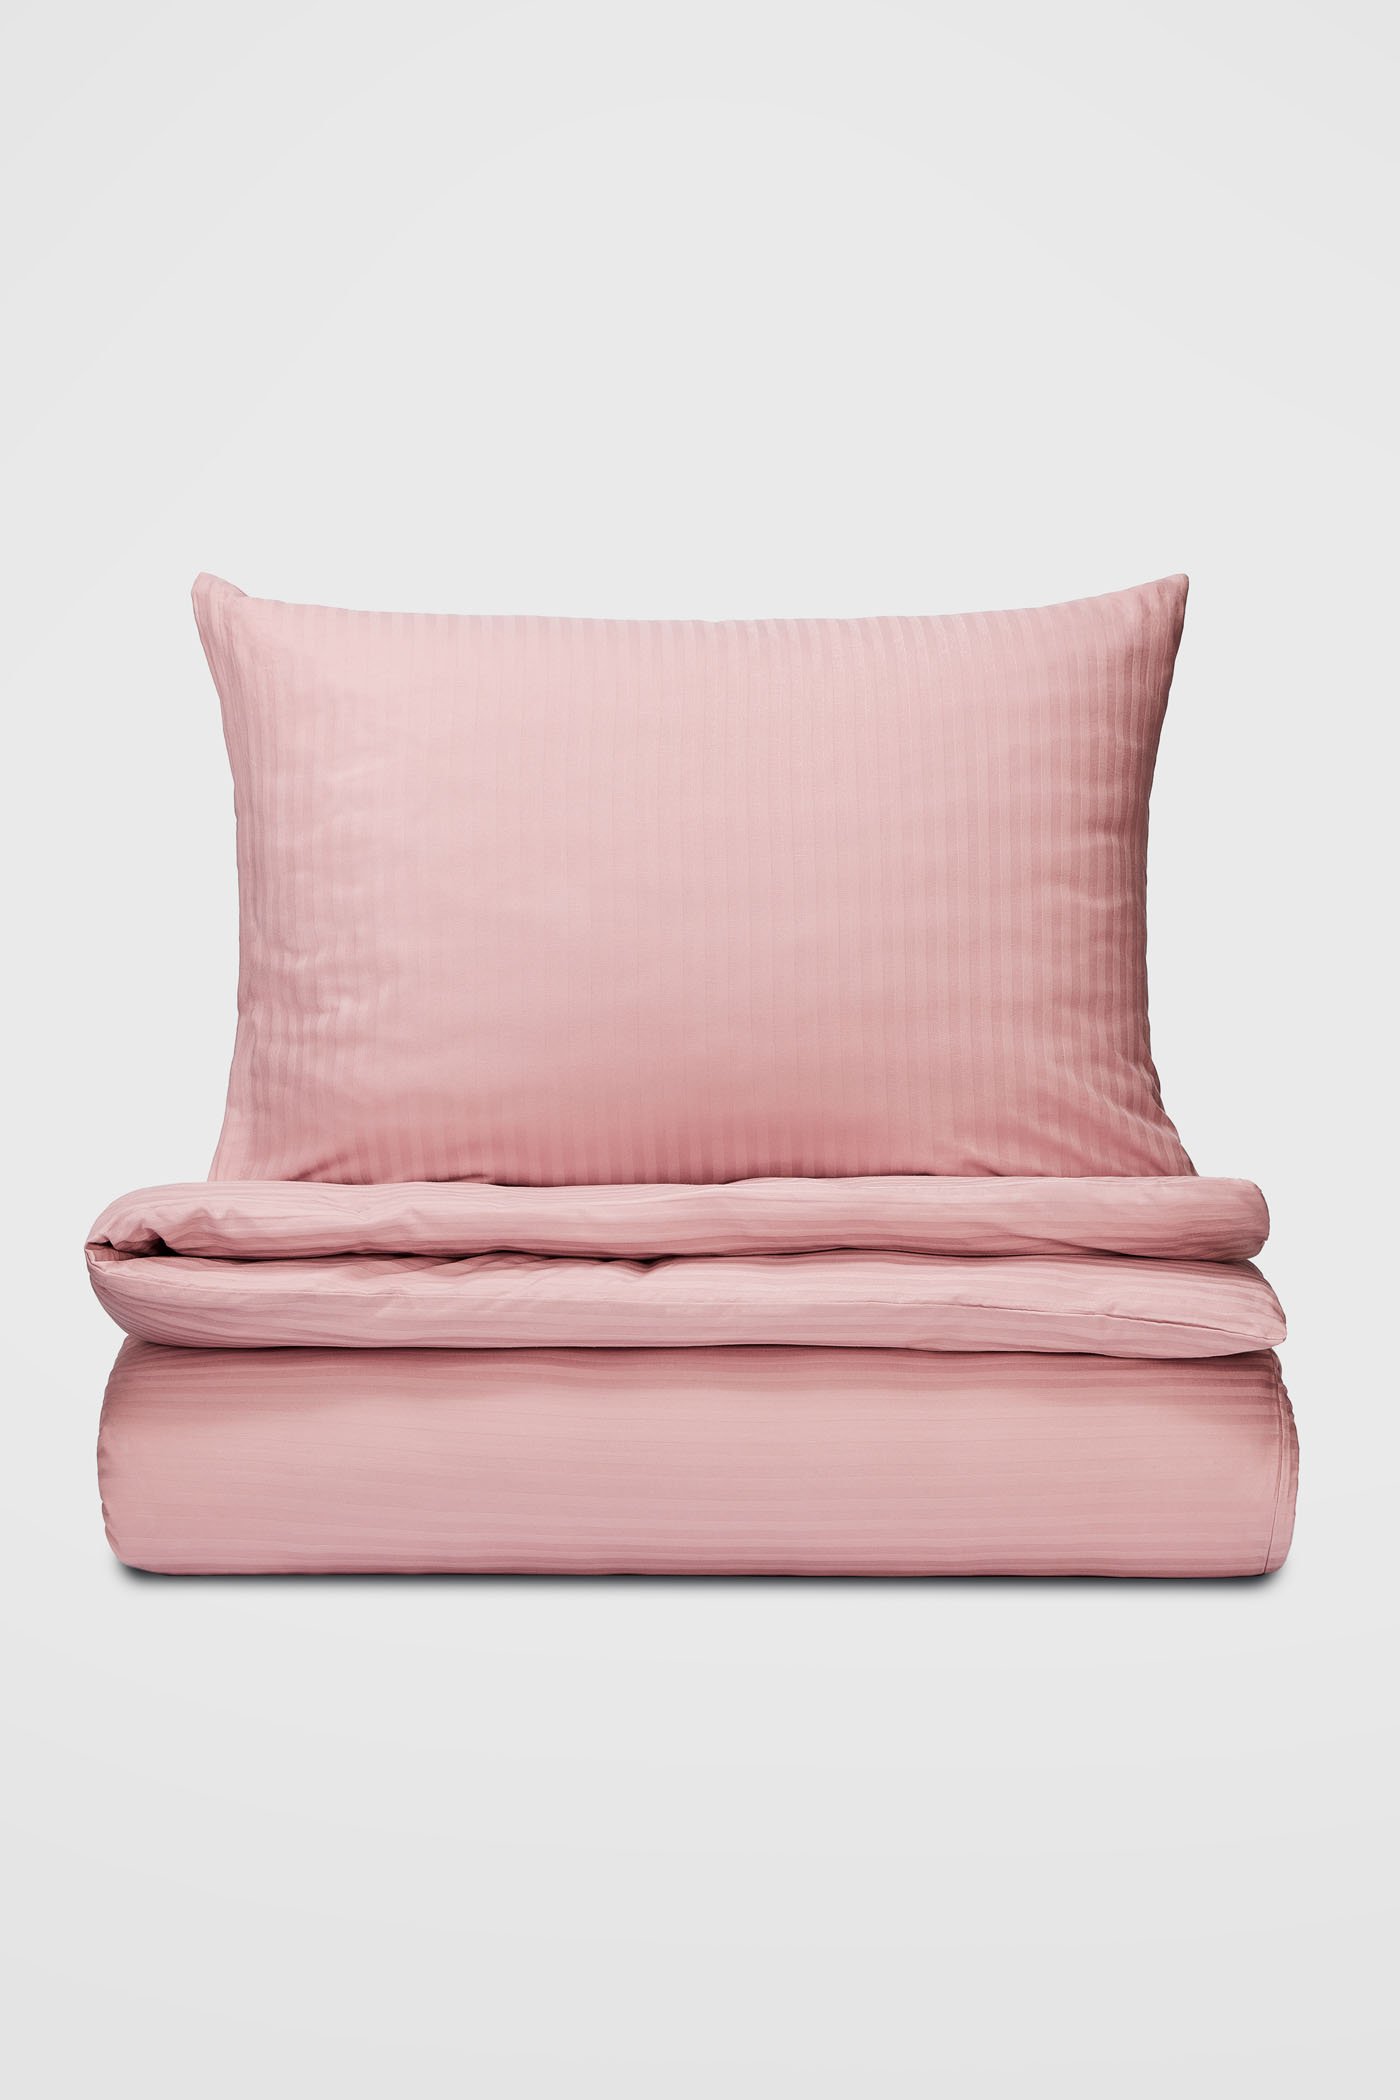 Stripe rózsaszín ágynemű | Astratex.hu